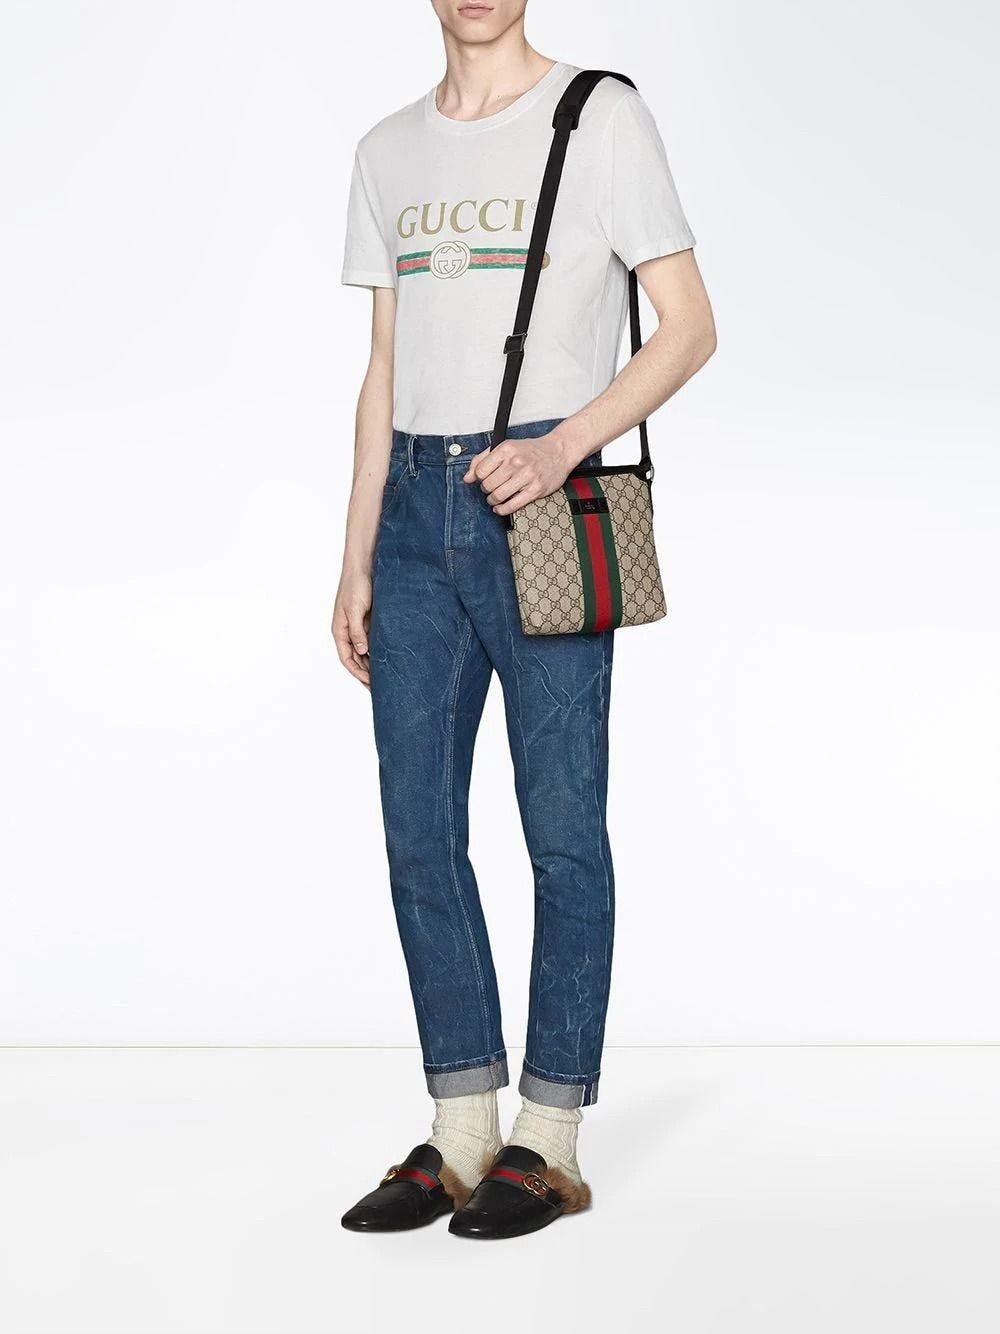 Gucci Beige & lilac GG supreme canvas flat messenger bag – Profile